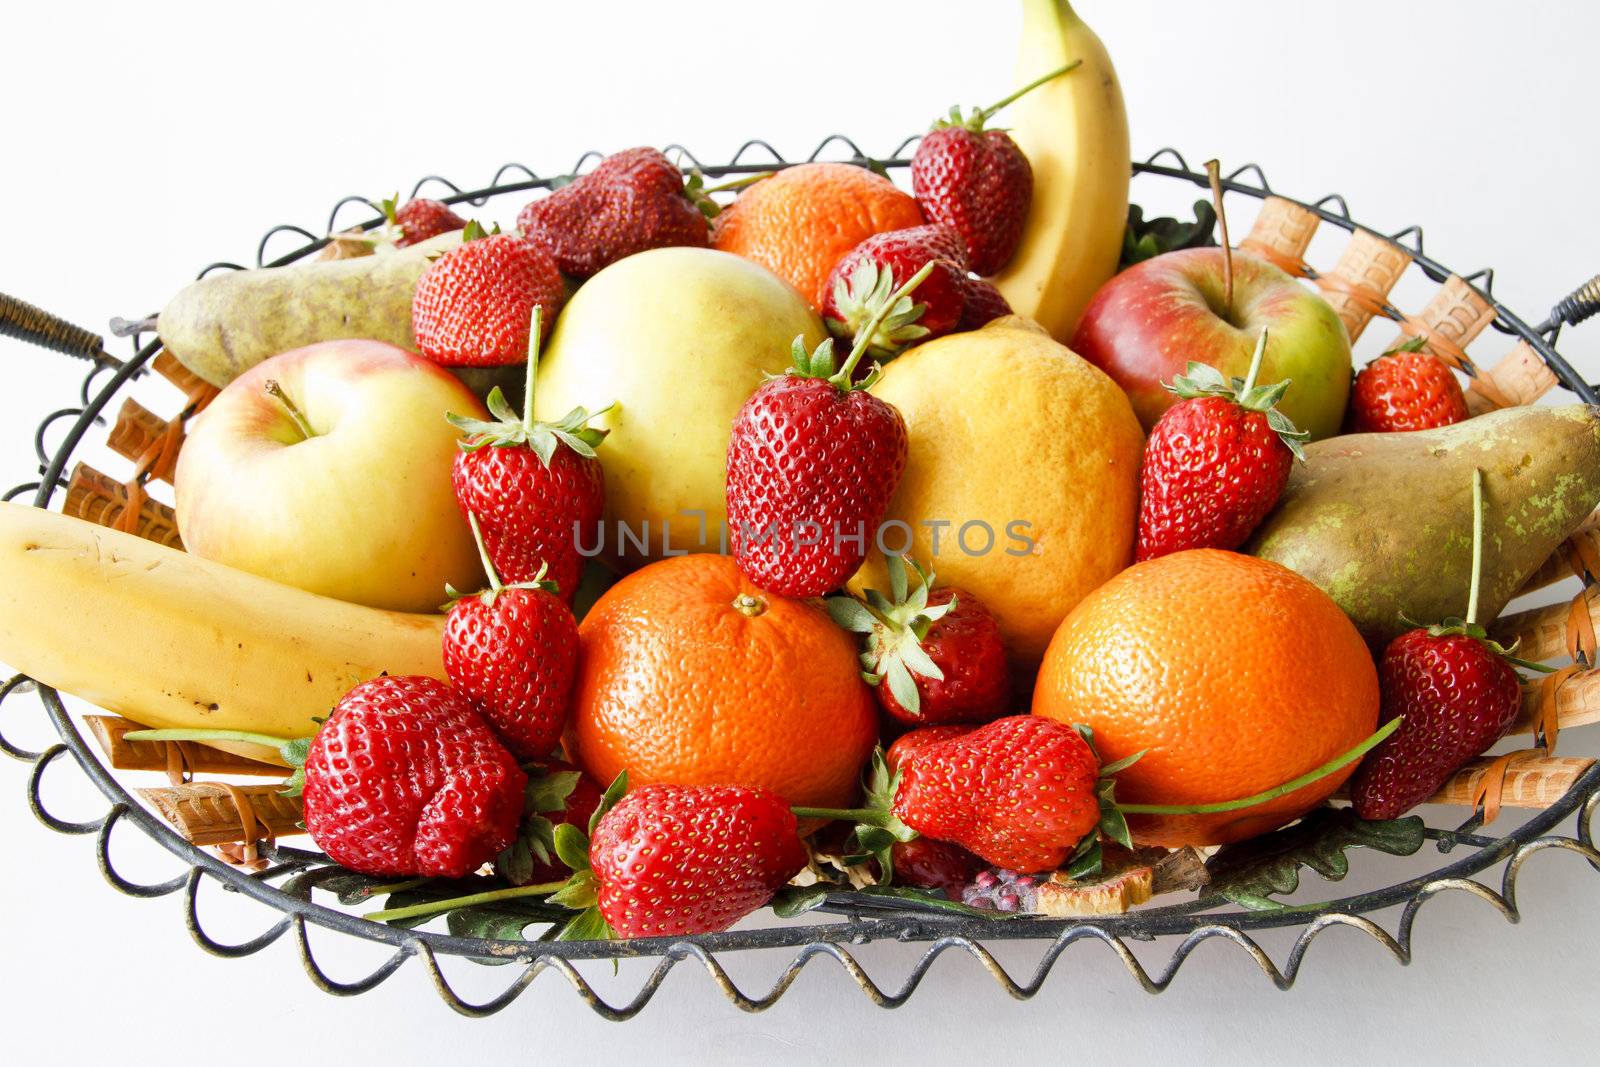 Fruits basket by manaemedia